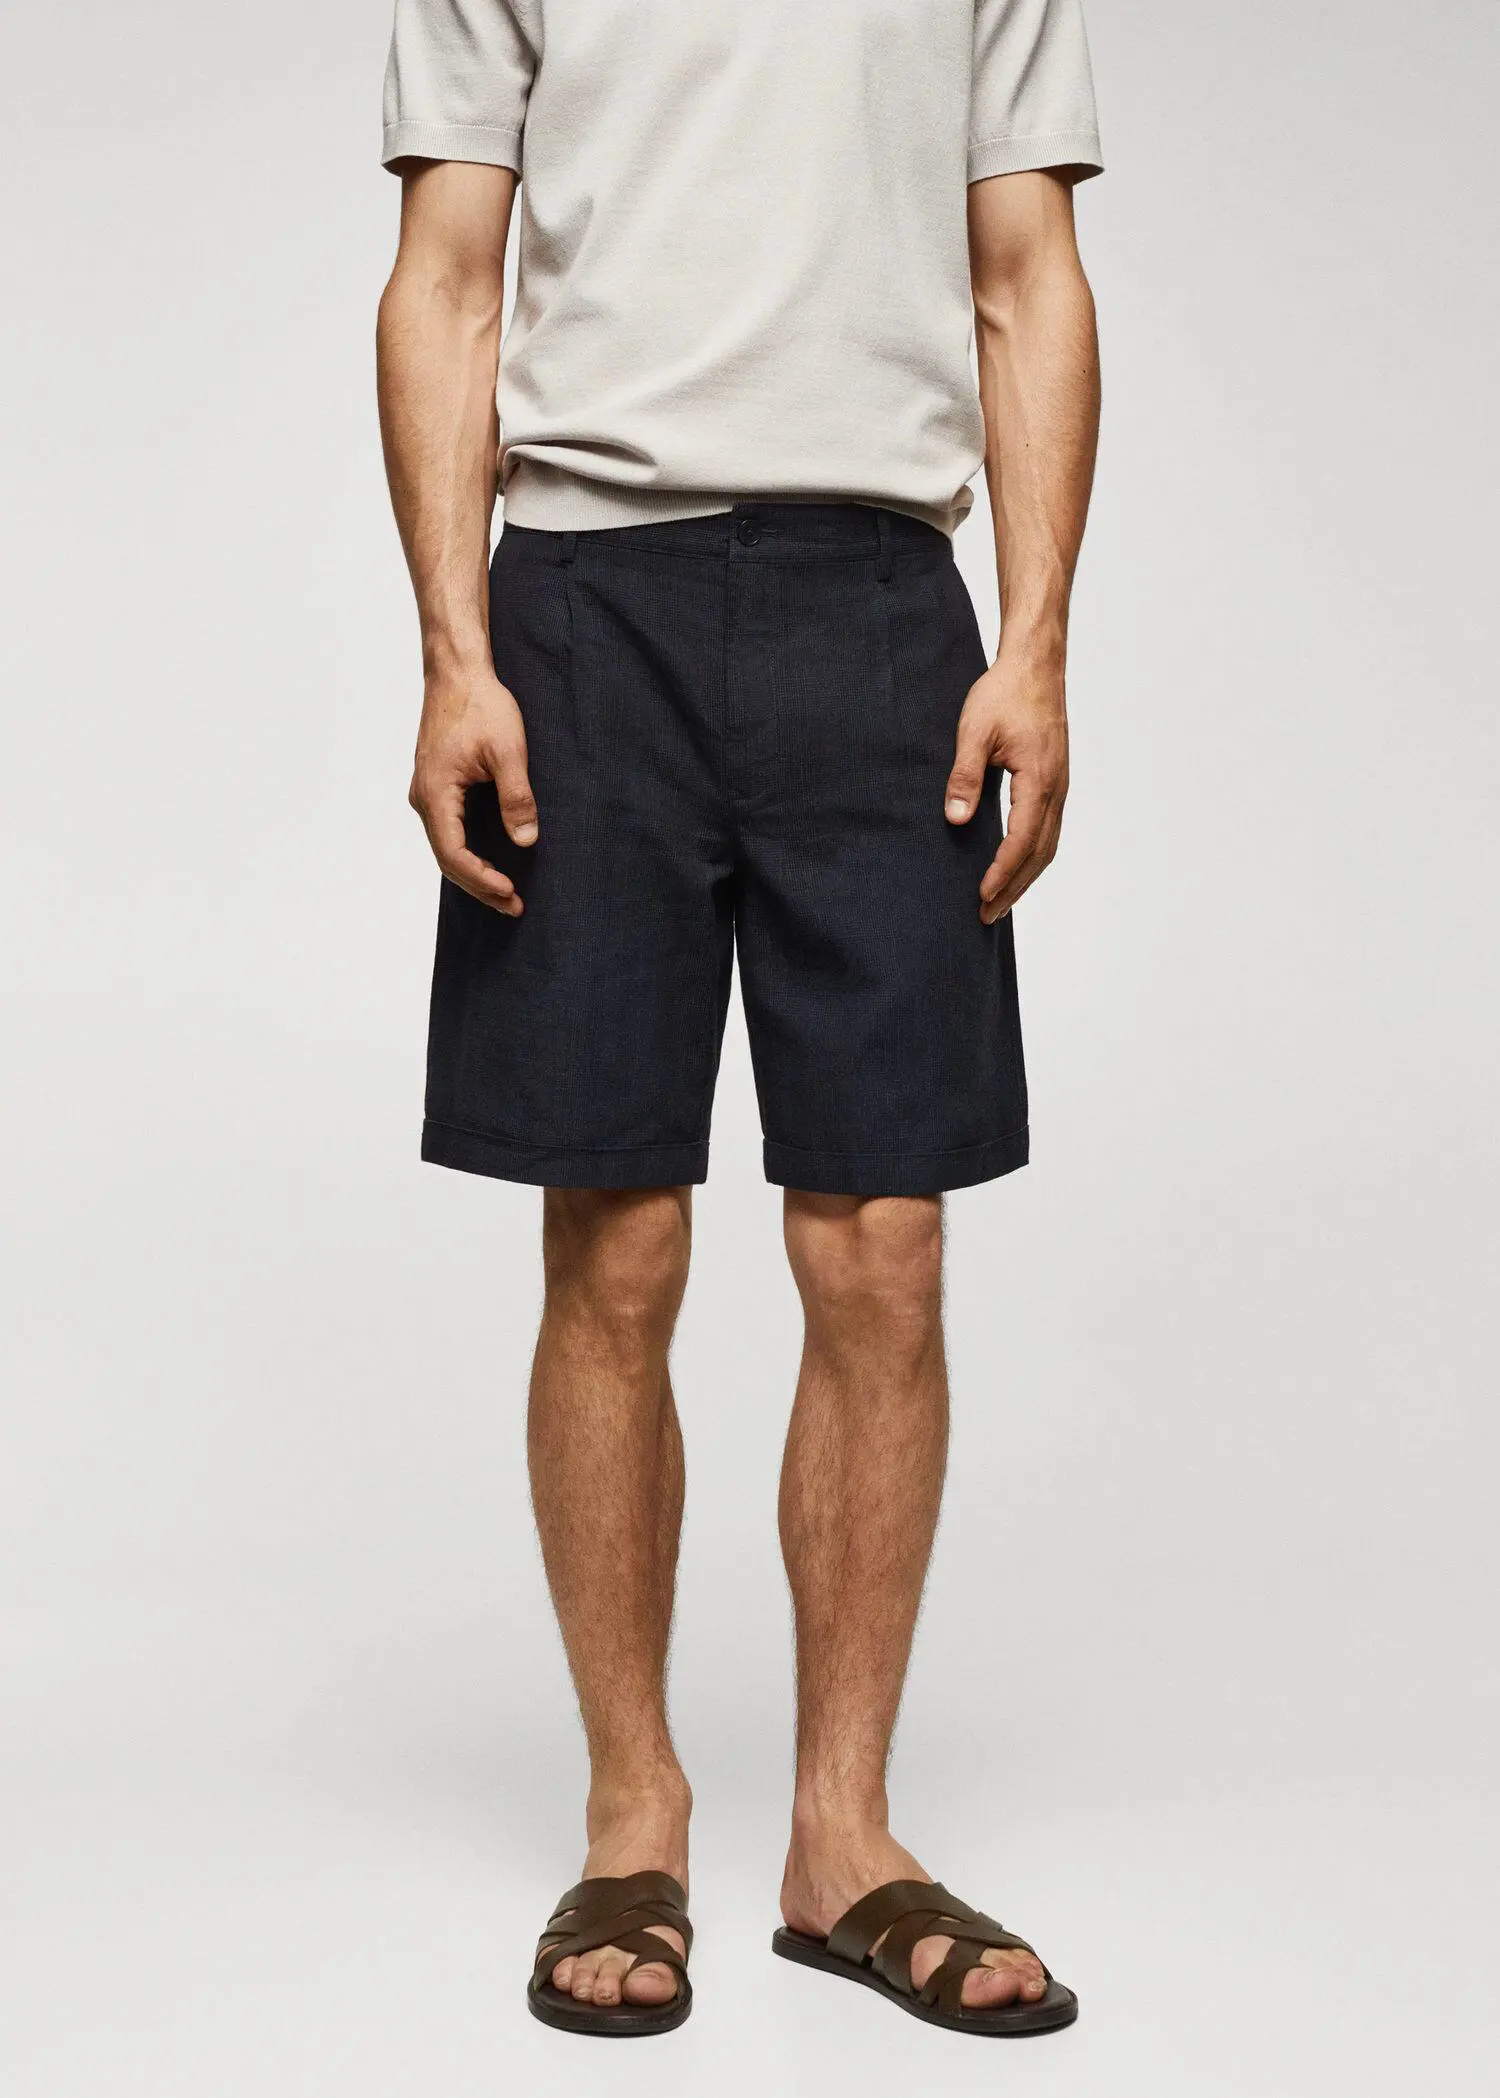 Mango Bermuda-Shorts aus Baumwoll-Leinen mit Prince-of-Wales-Check-Muster. 2